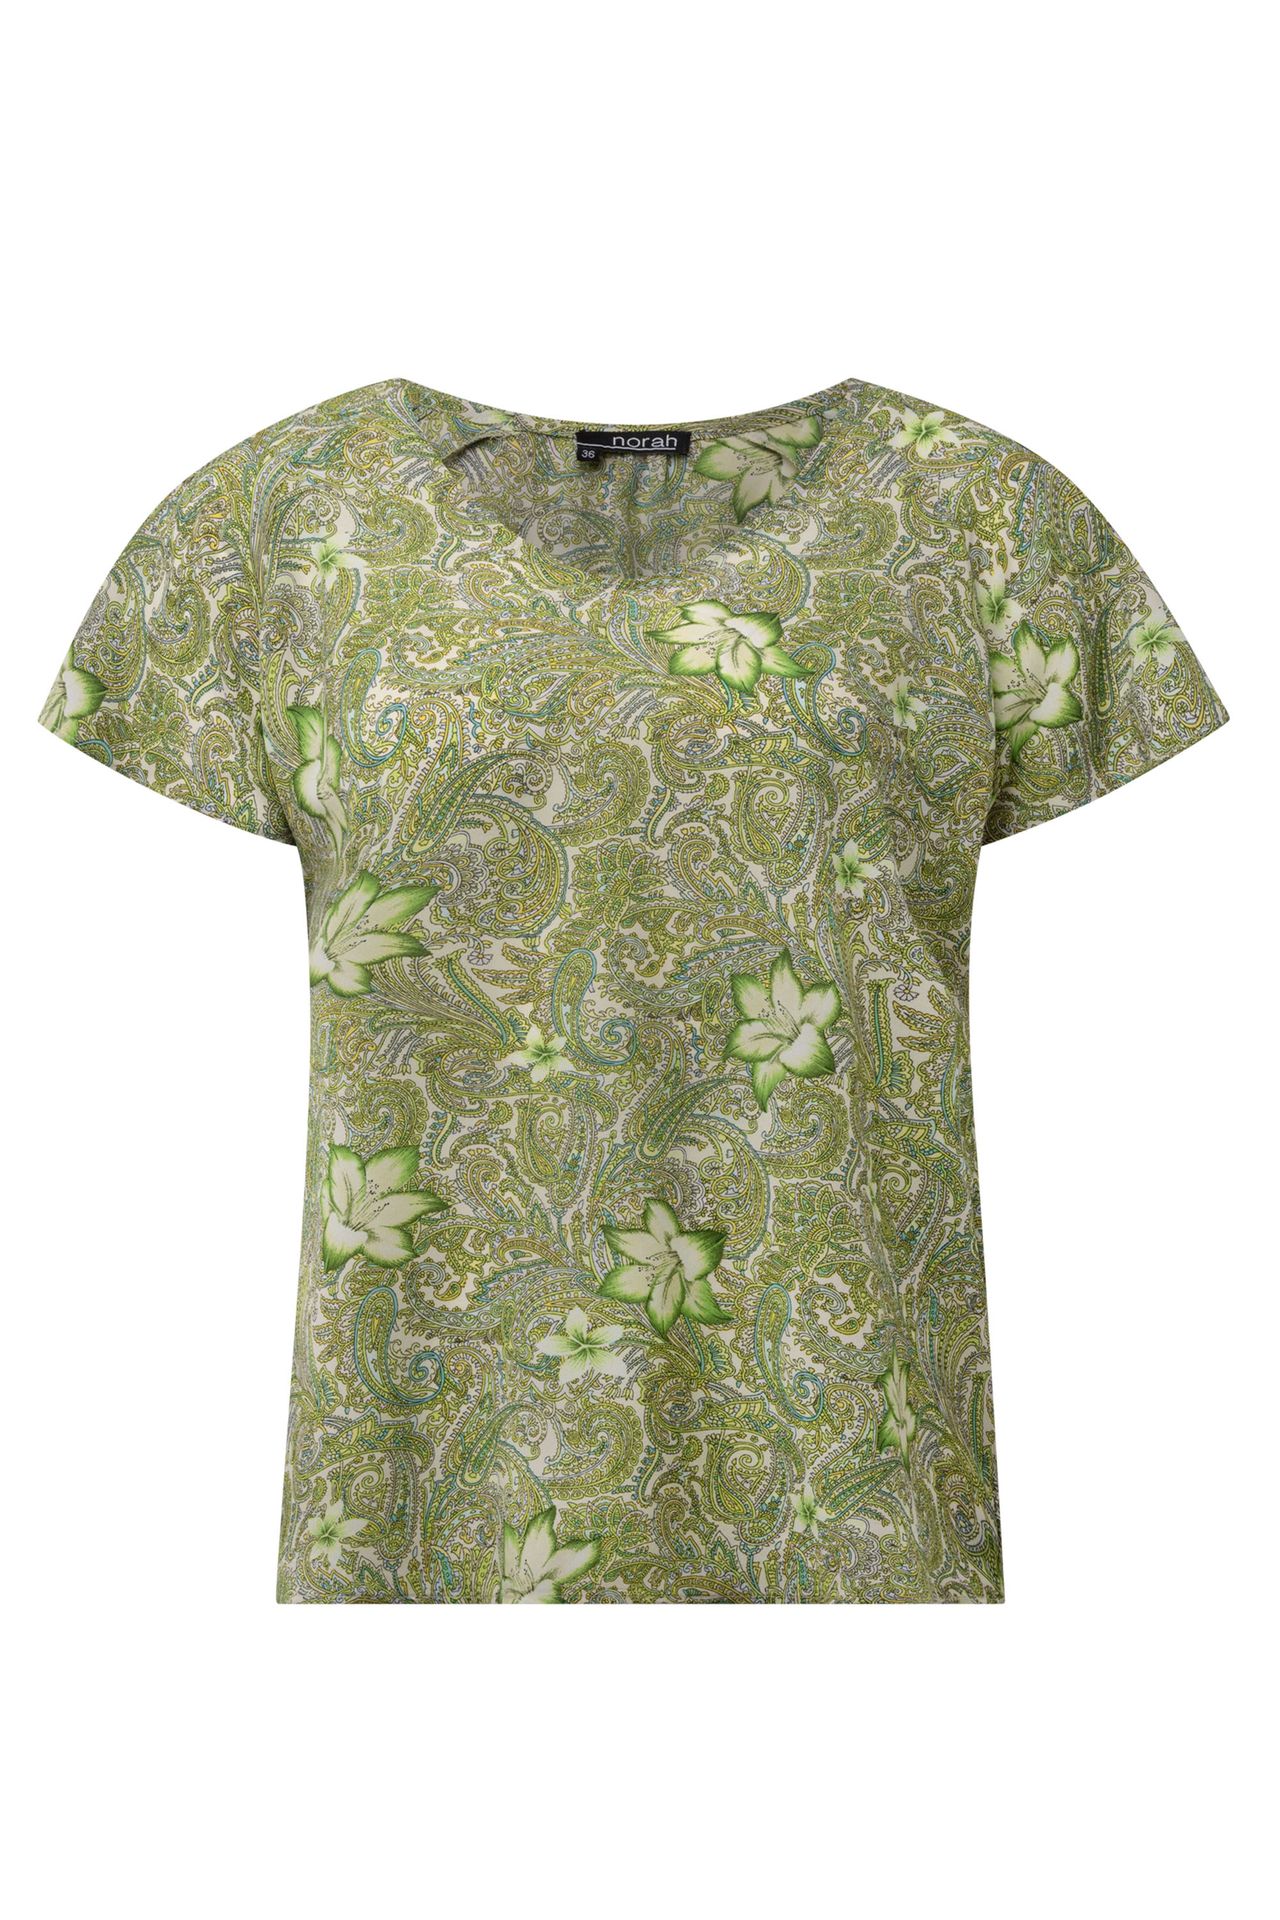 Norah Groene blouse apple green multicolor 212859-504